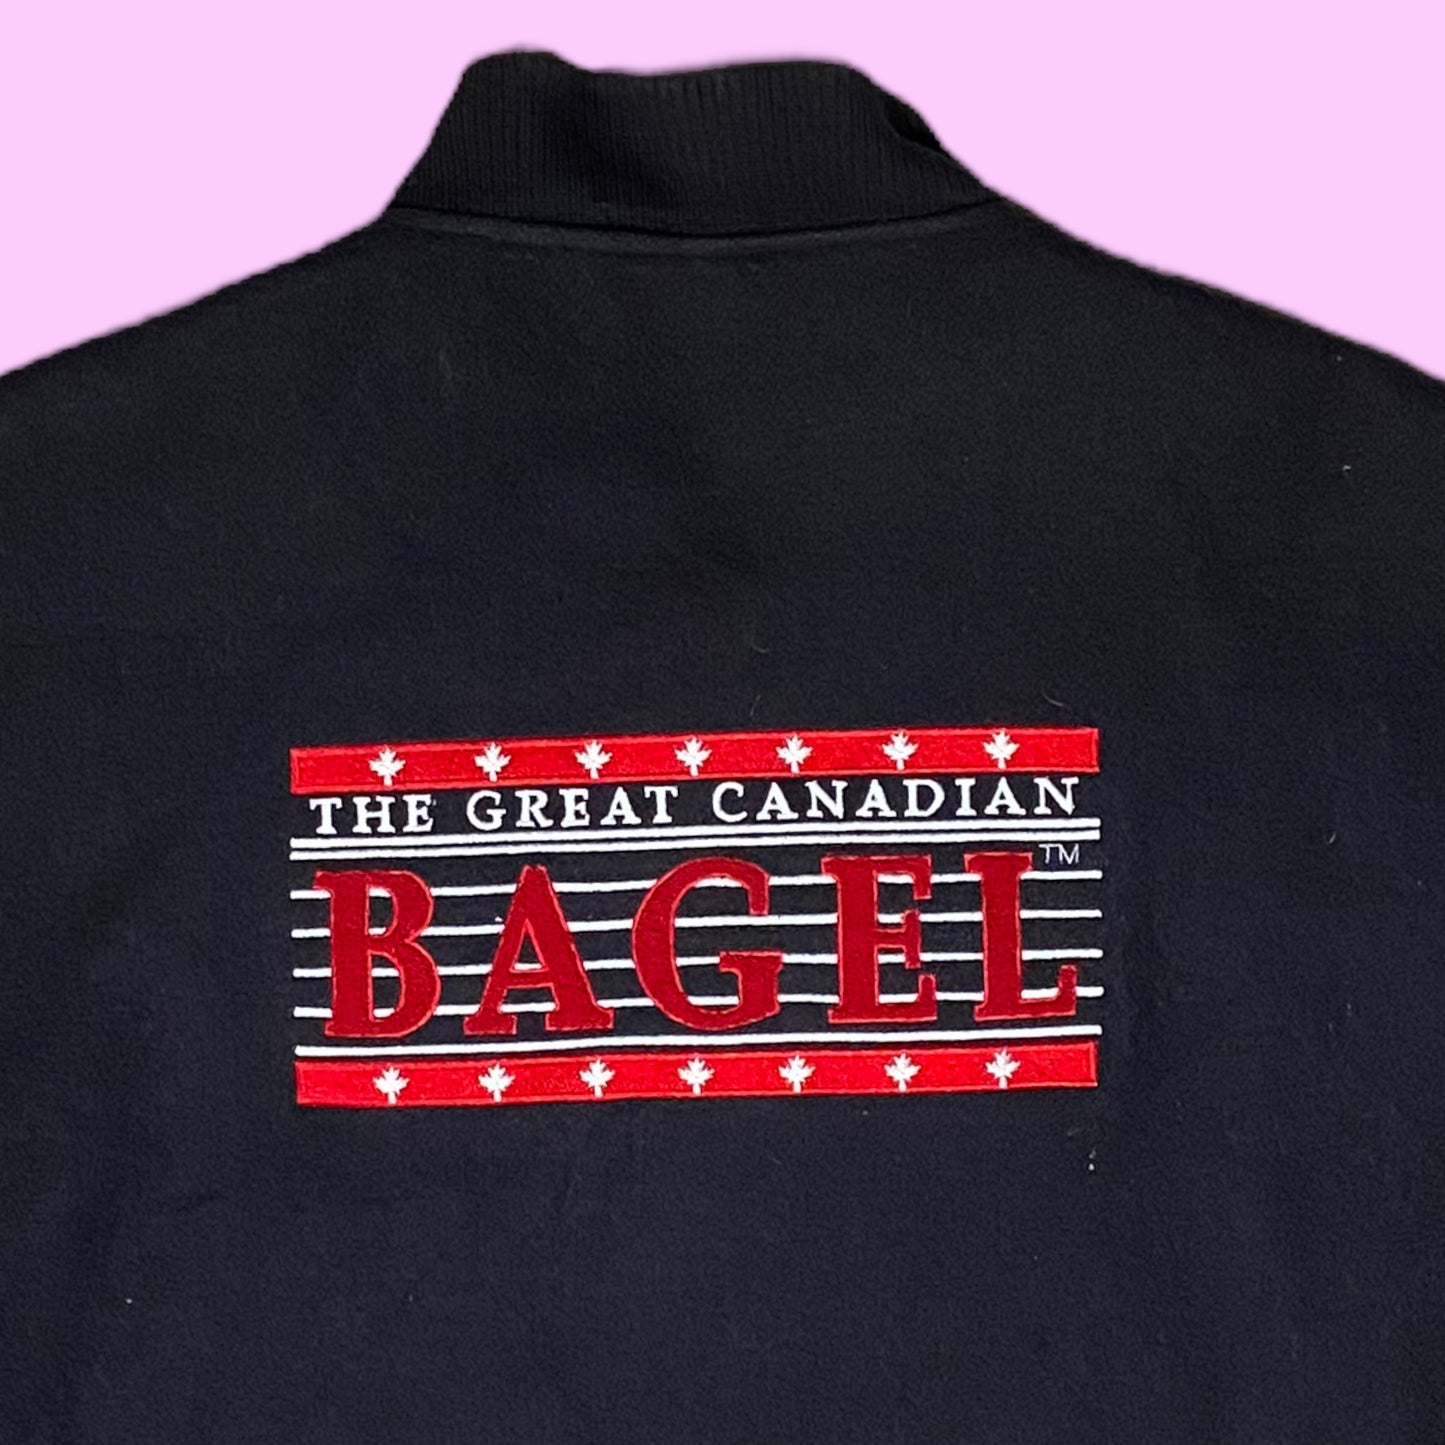 Vintage Great Canadian Bagel varsity jacket - XL